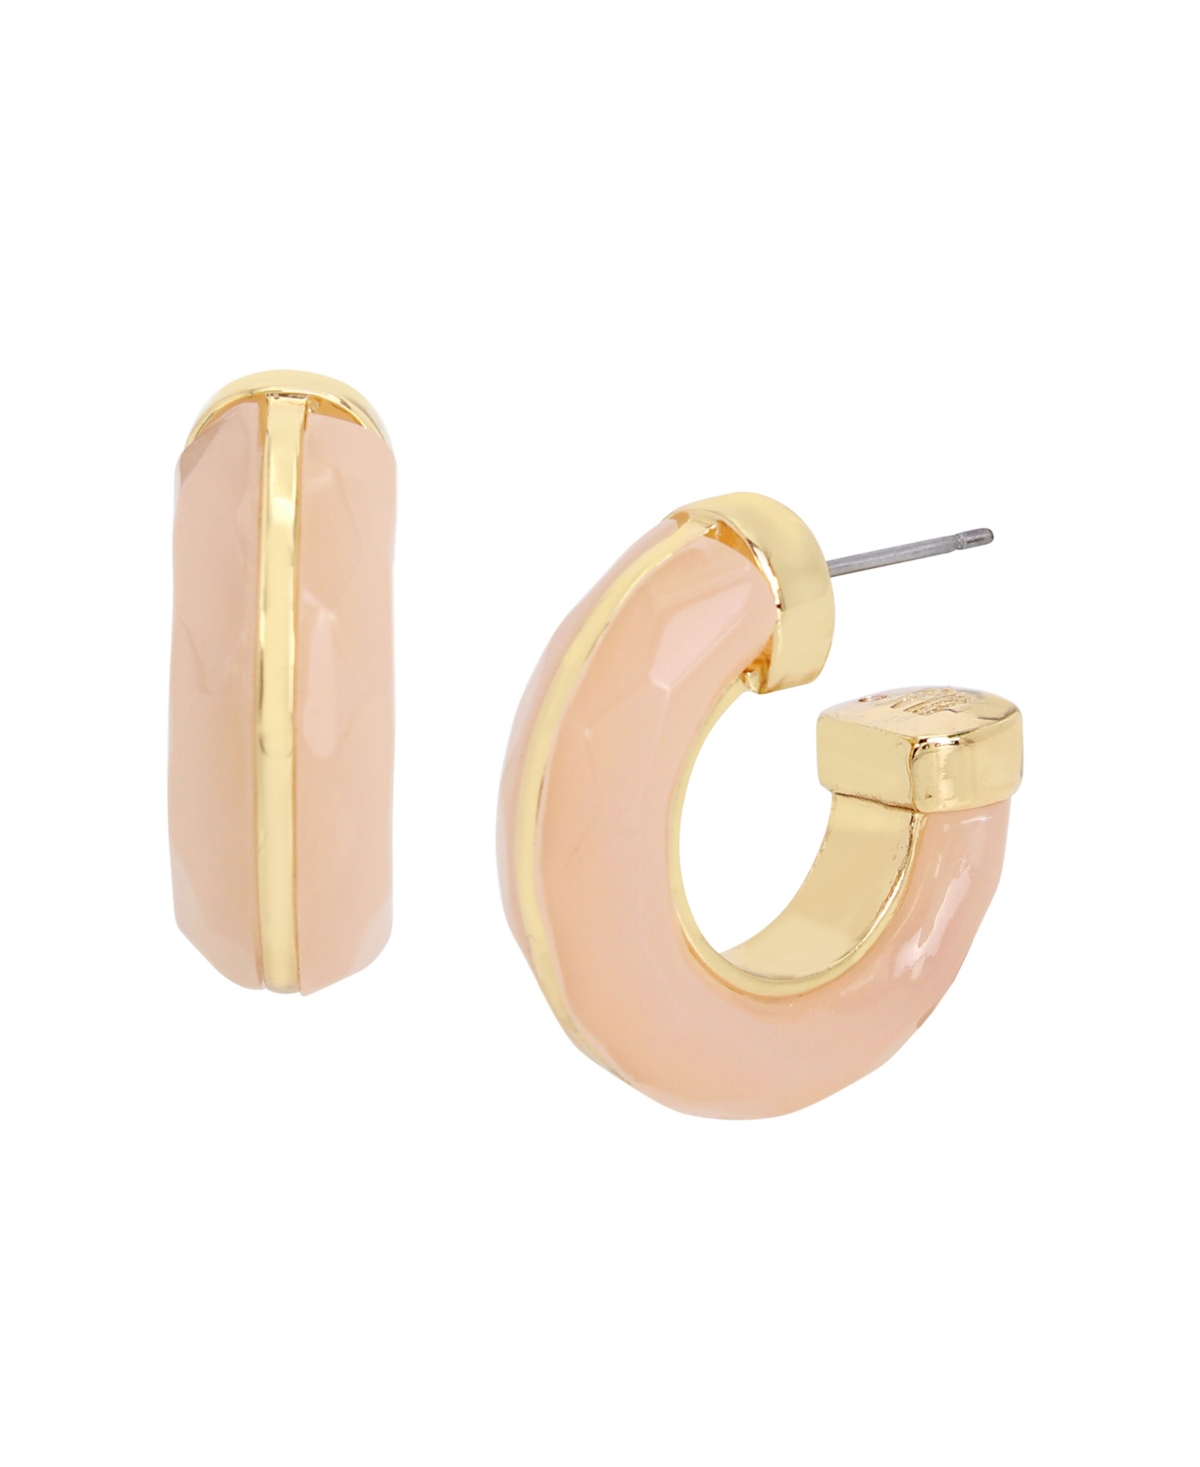 Faux Stone Rose Quartz Hoop Earrings - Rose Quartz, Gold